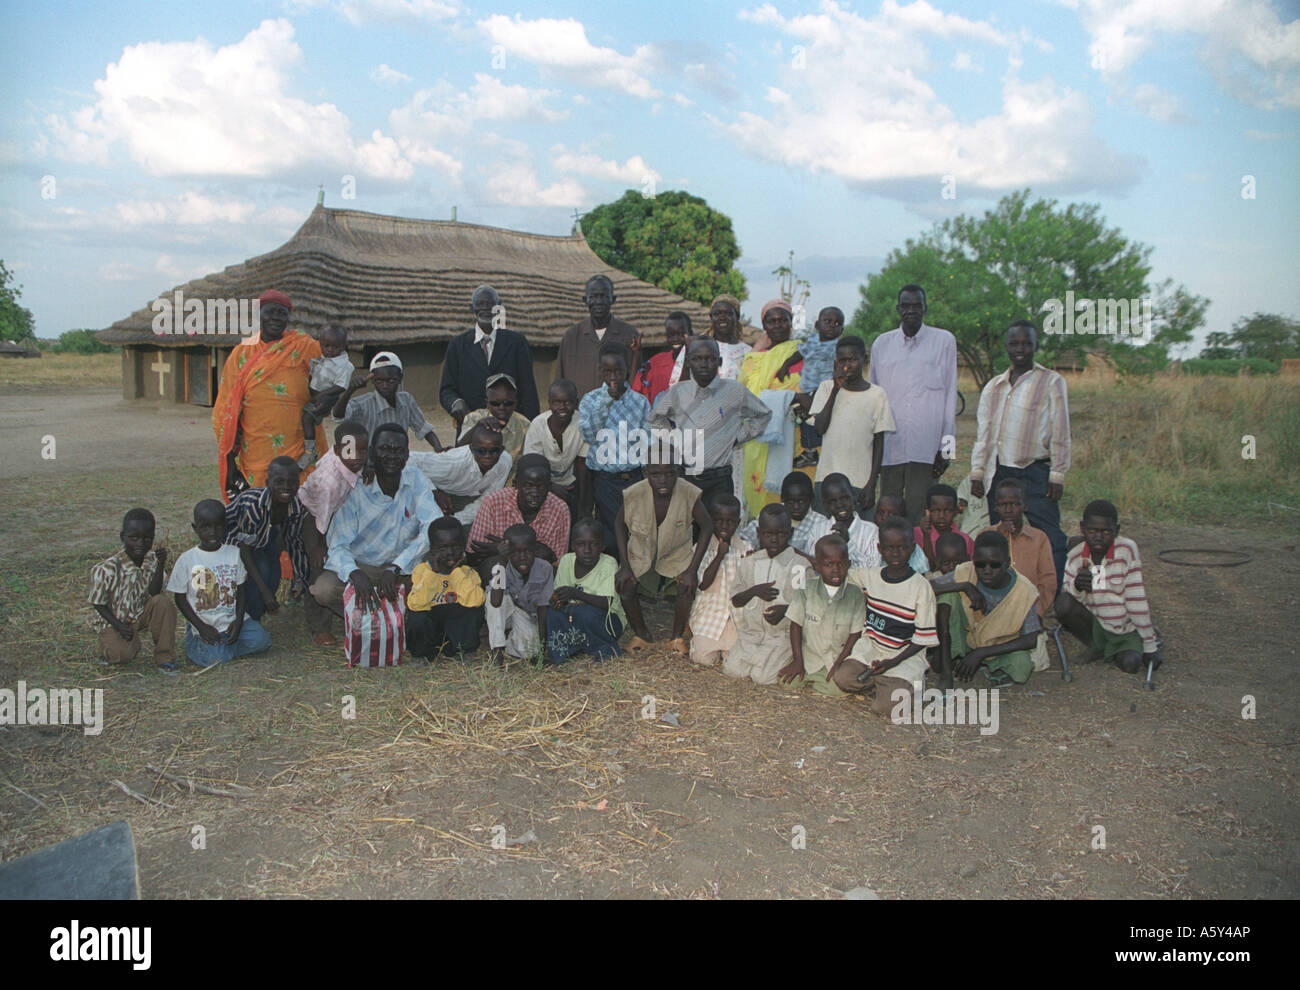 Group of people, Juba, South Sudan Stock Photo